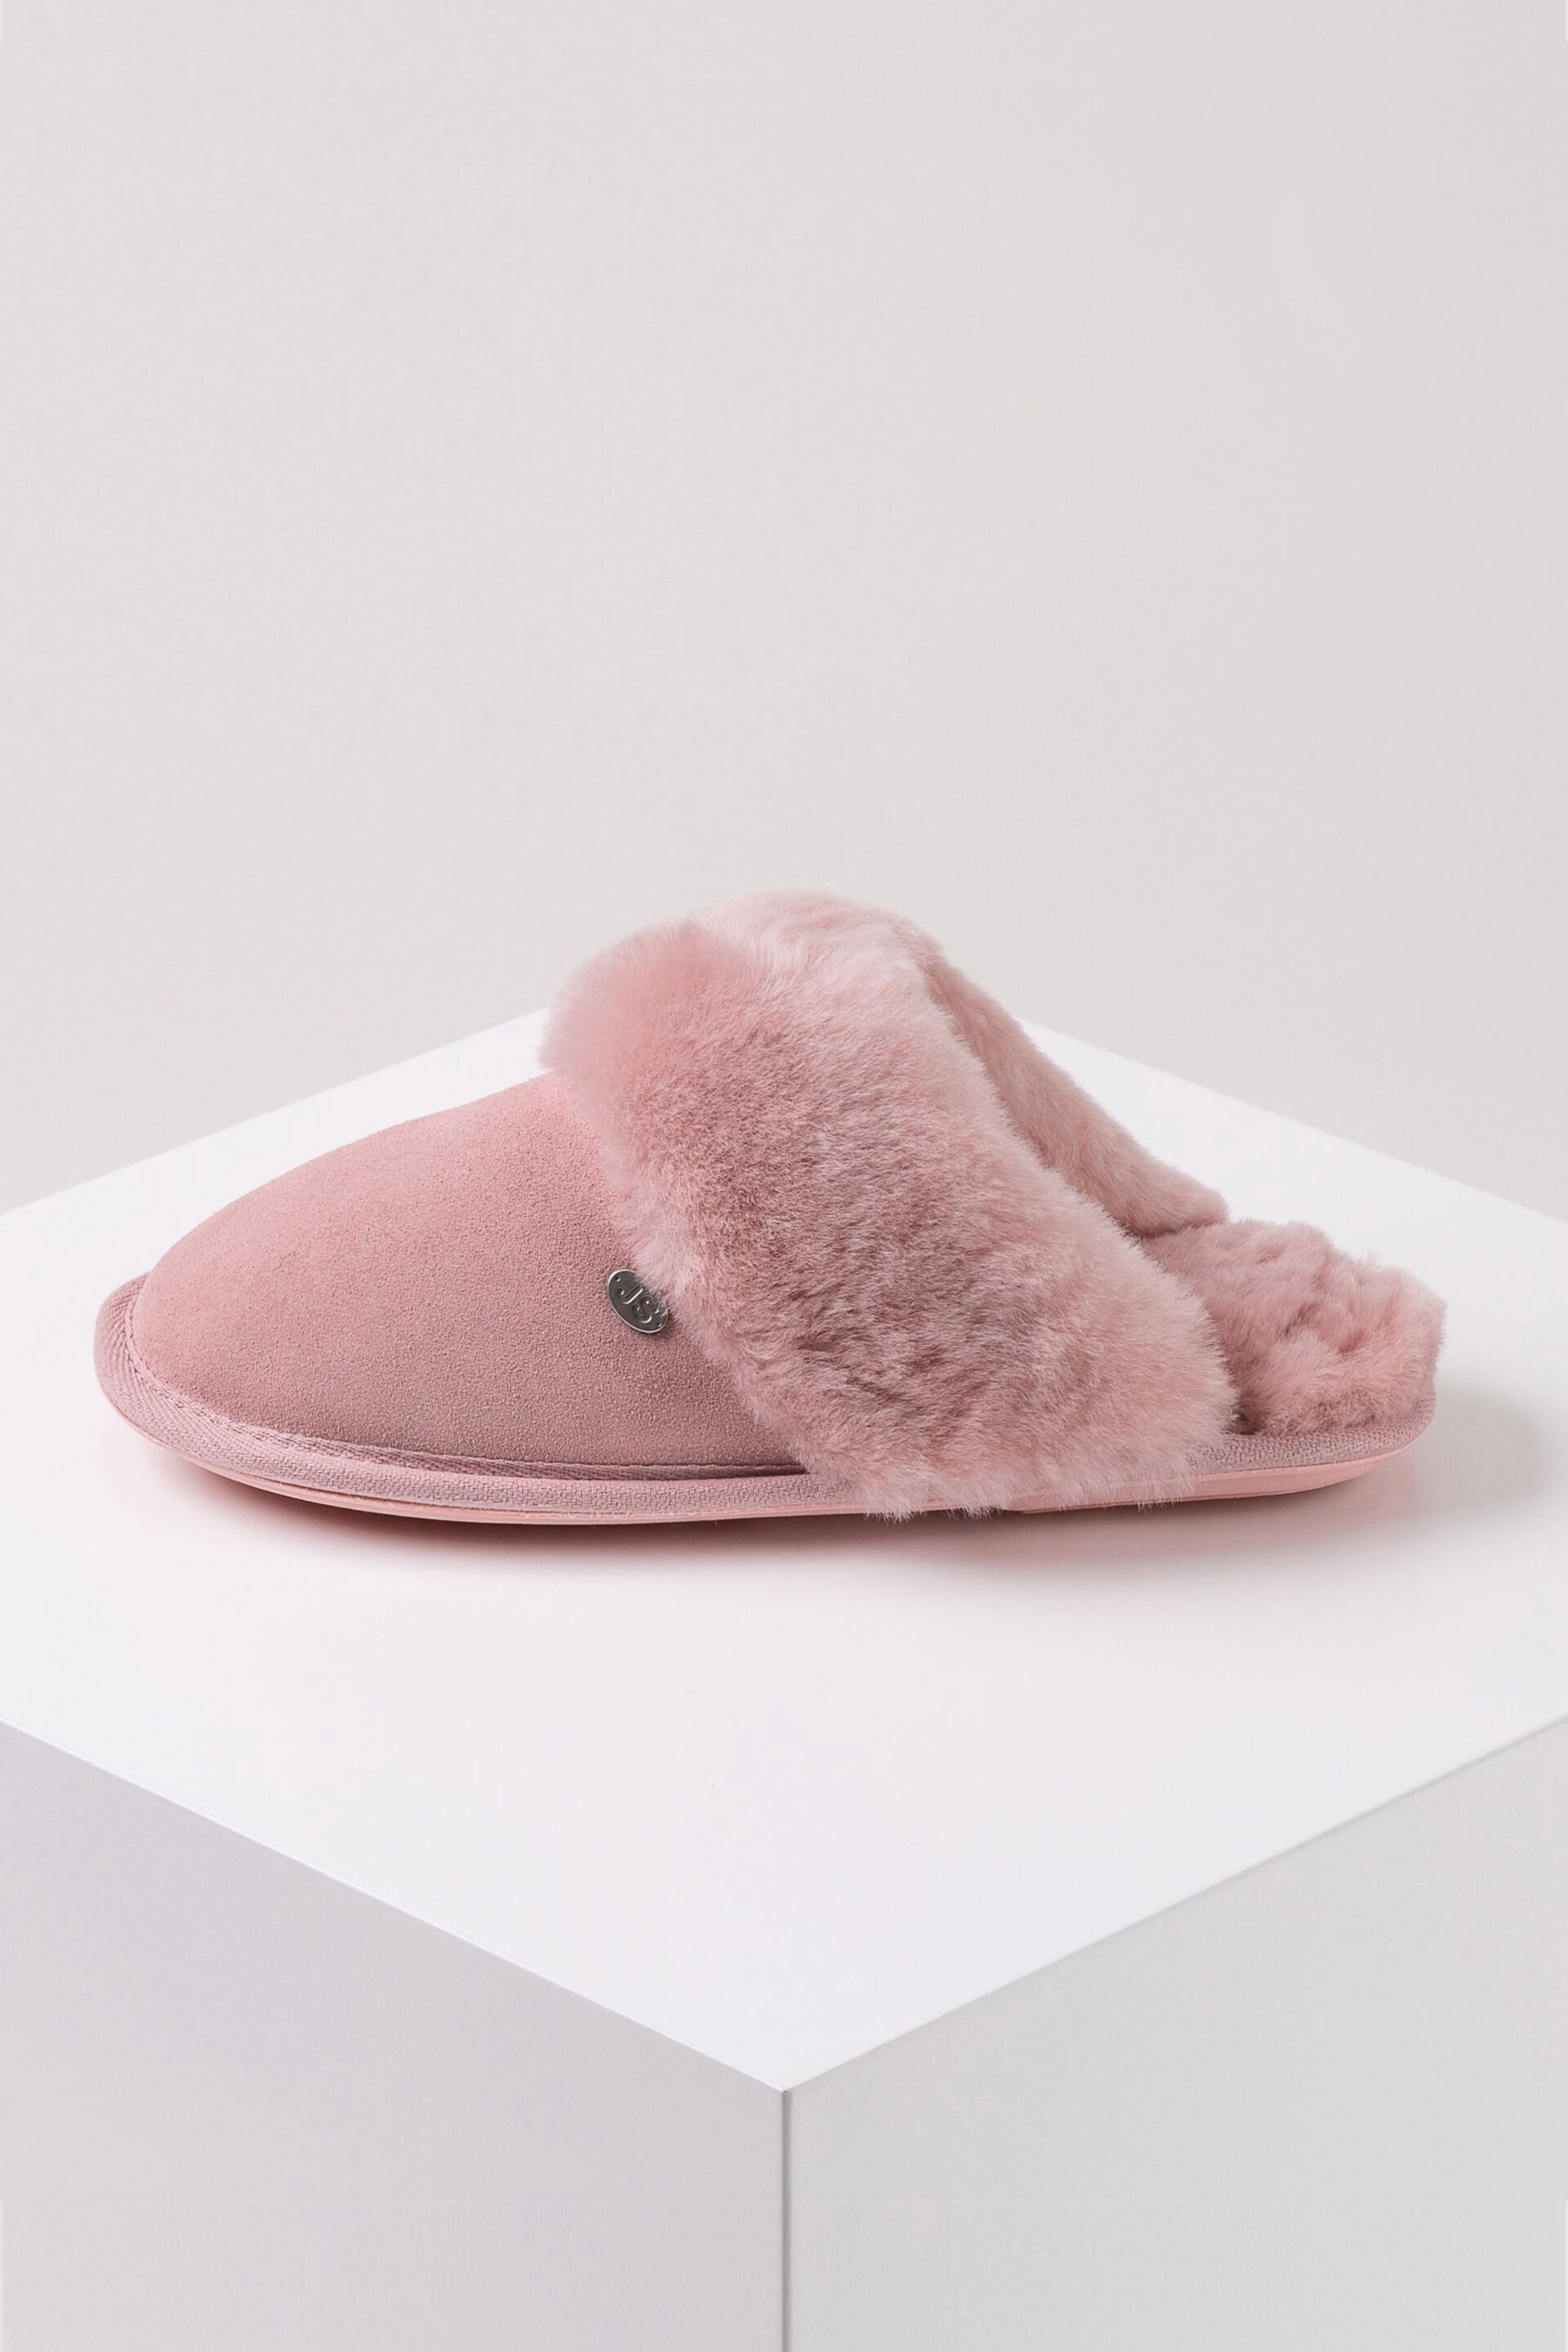 Just Sheepskin Baby Pink Ladies Duchess Sheepskin Slippers - Image 3 of 5